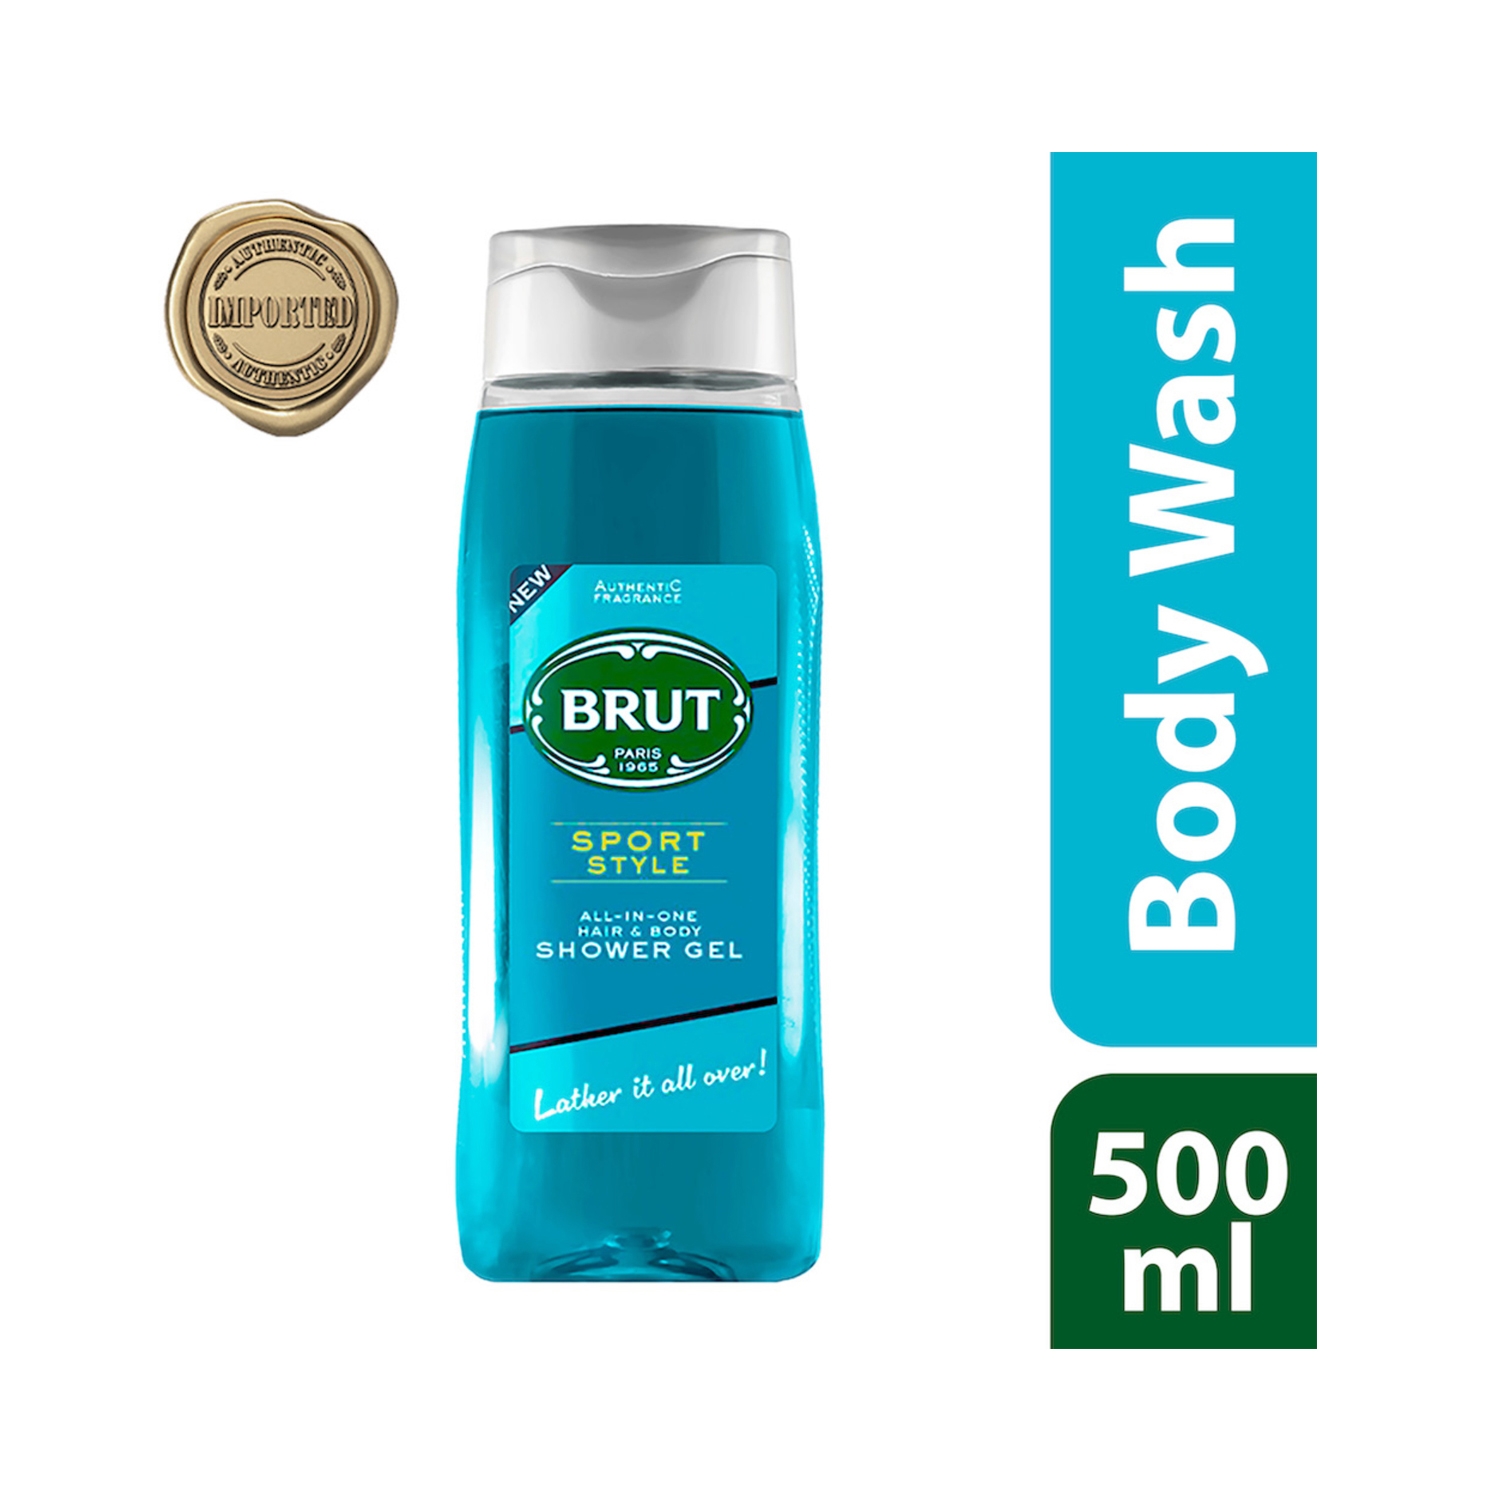 Brut Sport Style All-In-One Hair & Body Shower Gel (500ml)